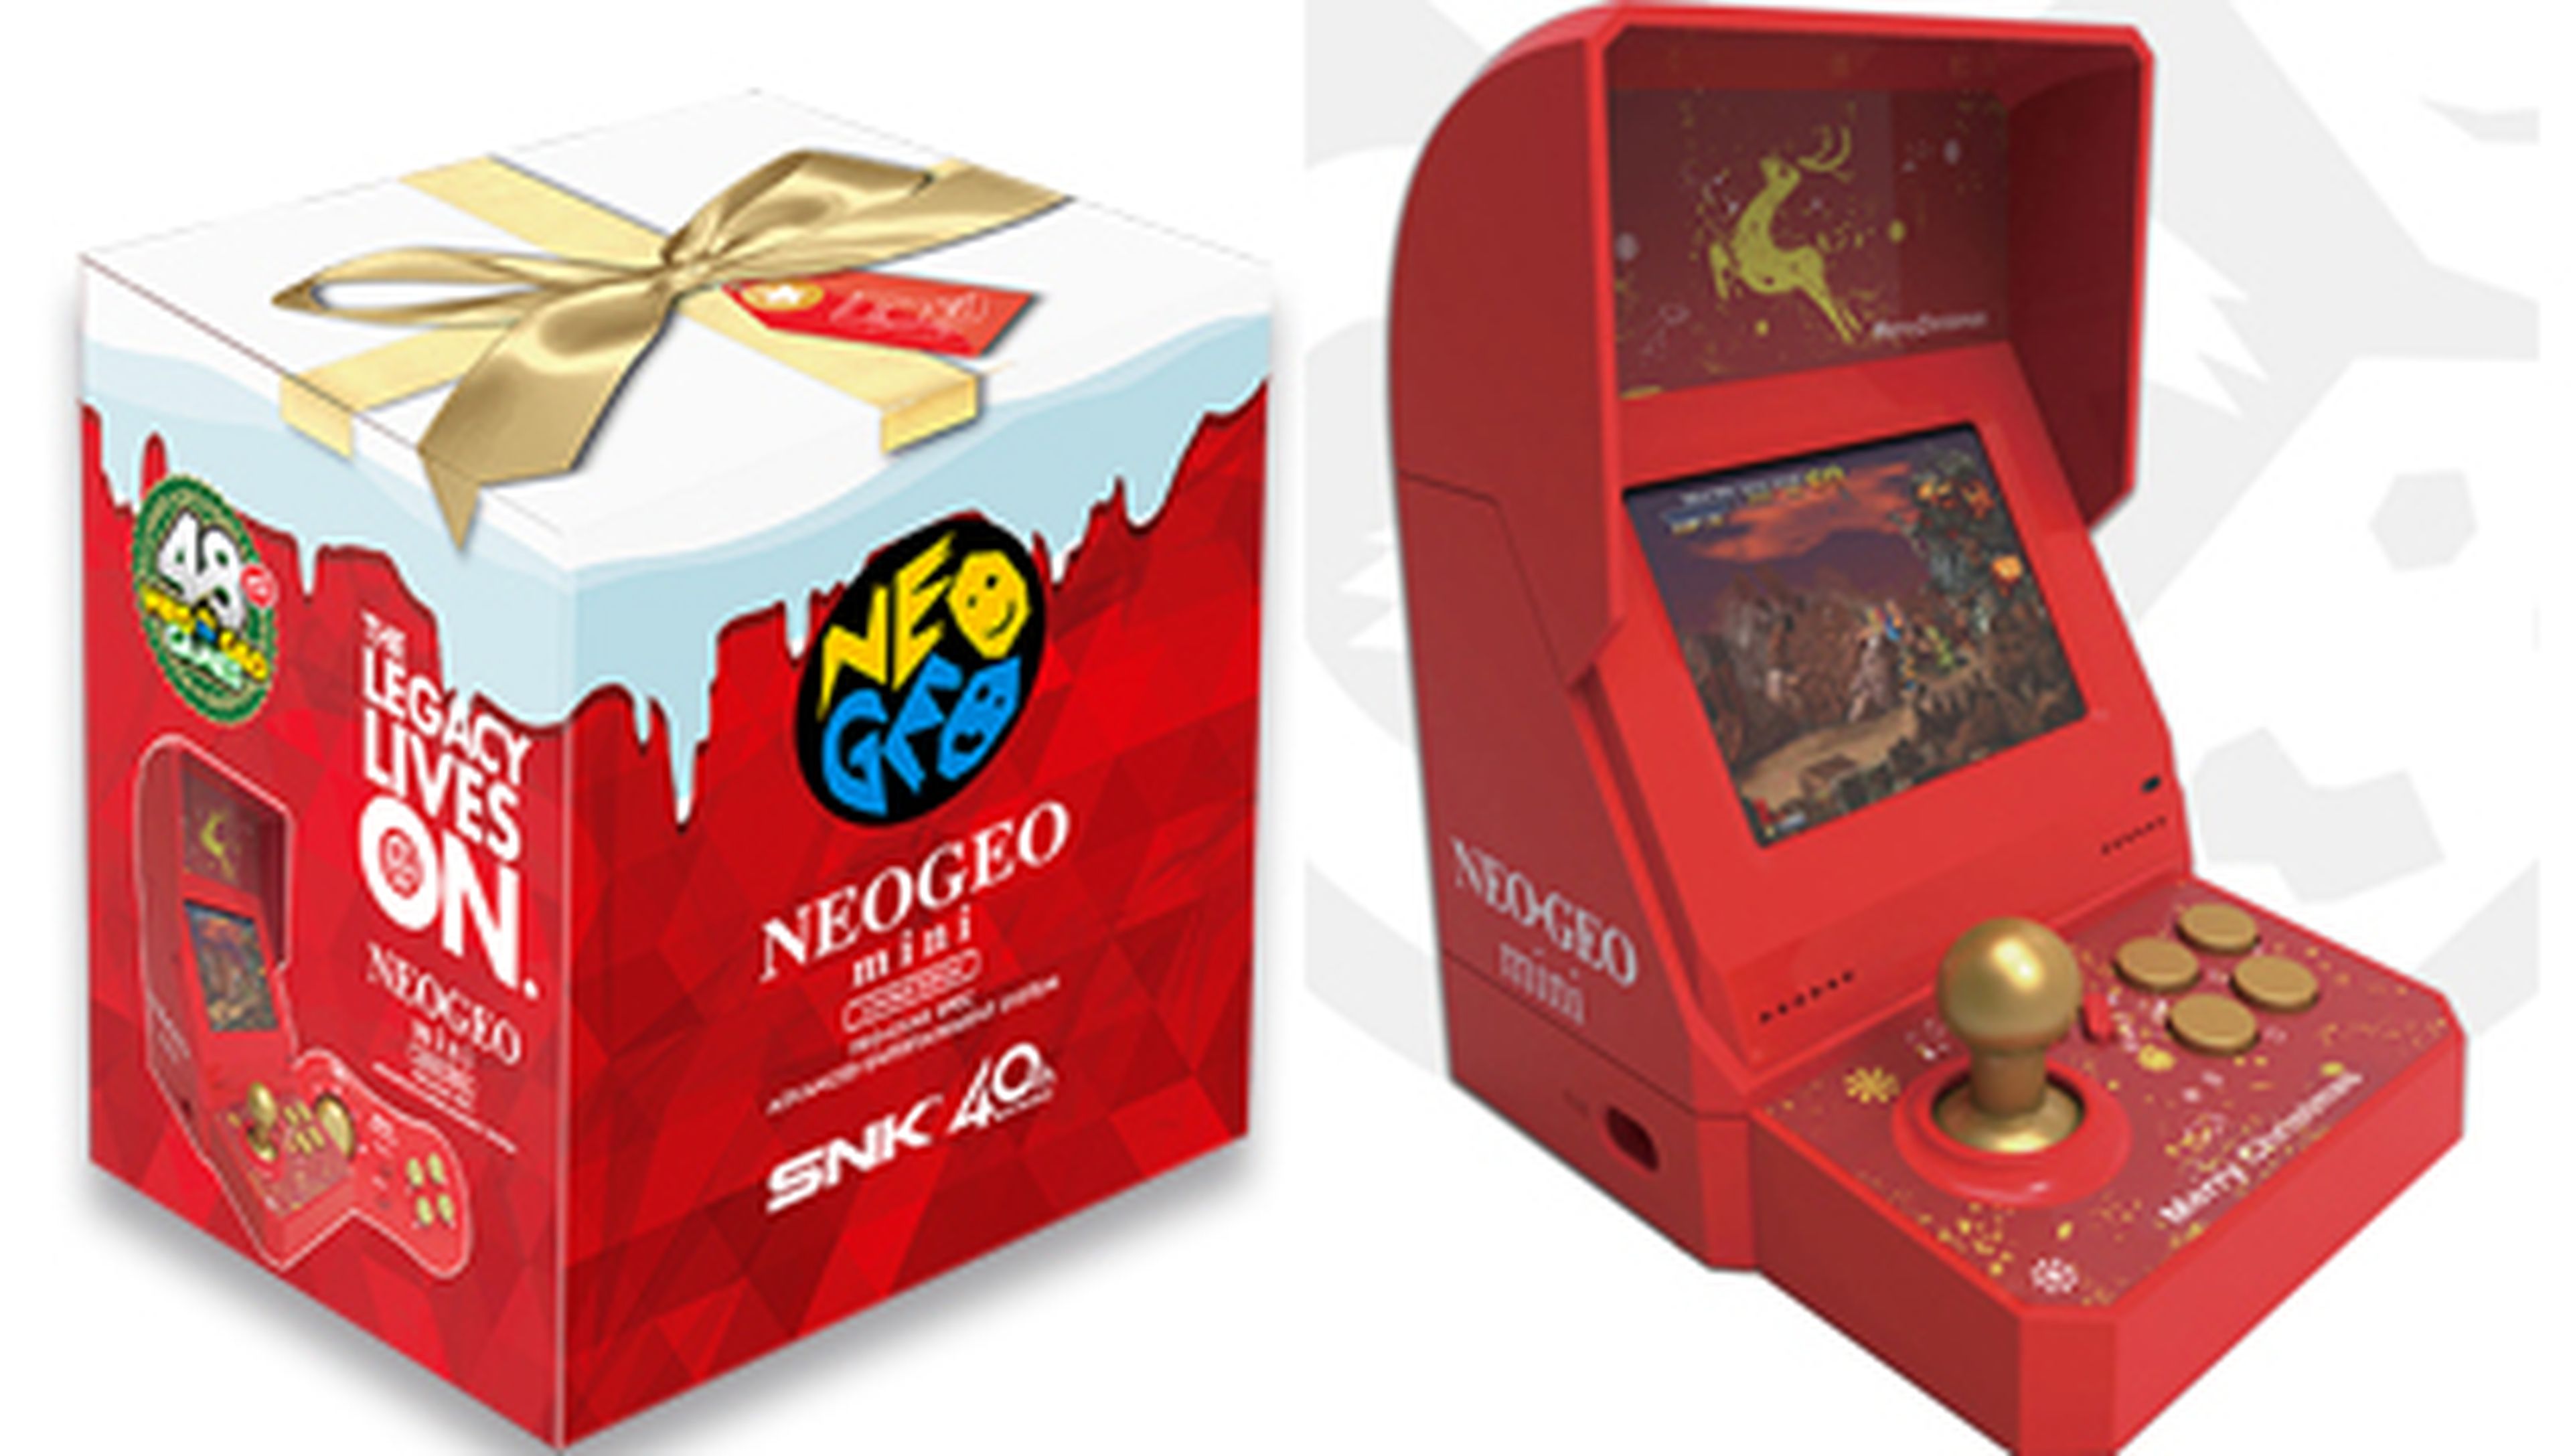 NEOGEO Mini Christmas [Limited Edition]